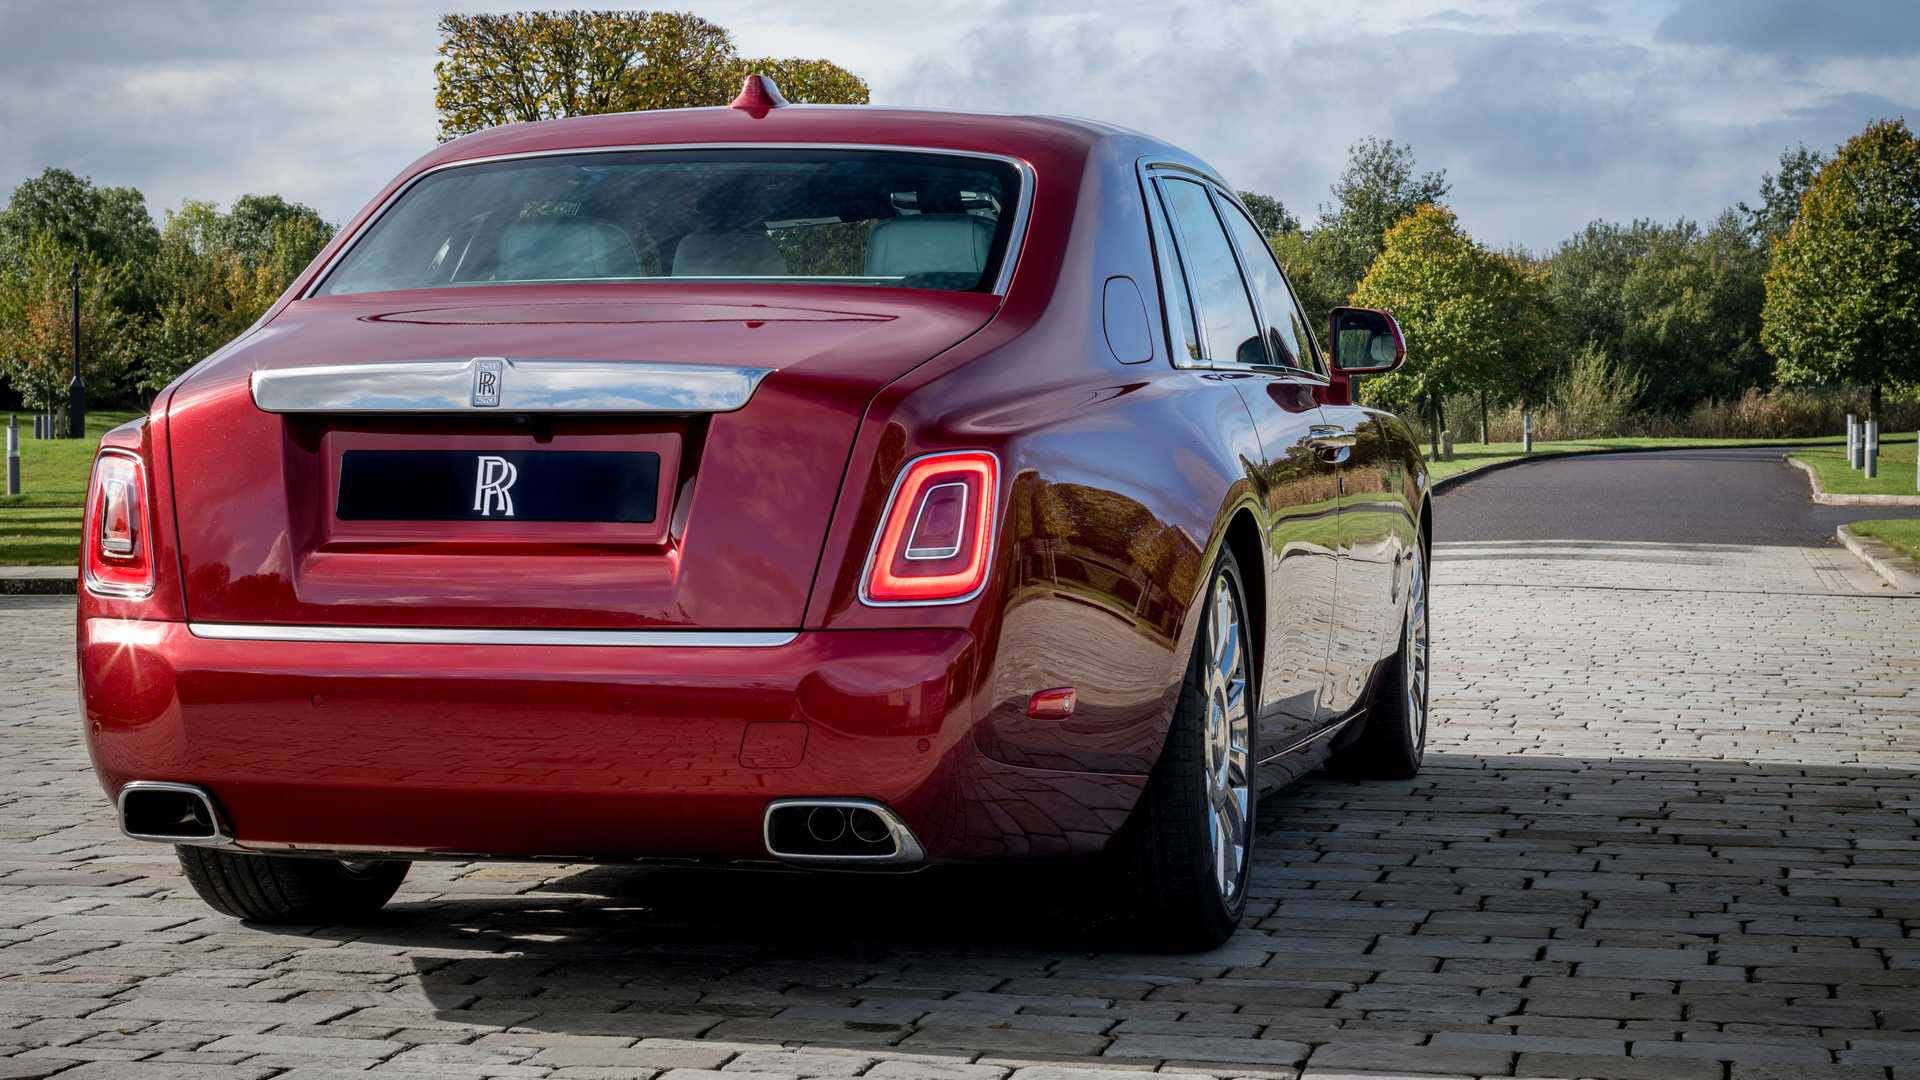 Rolls-Royce Phantom Red